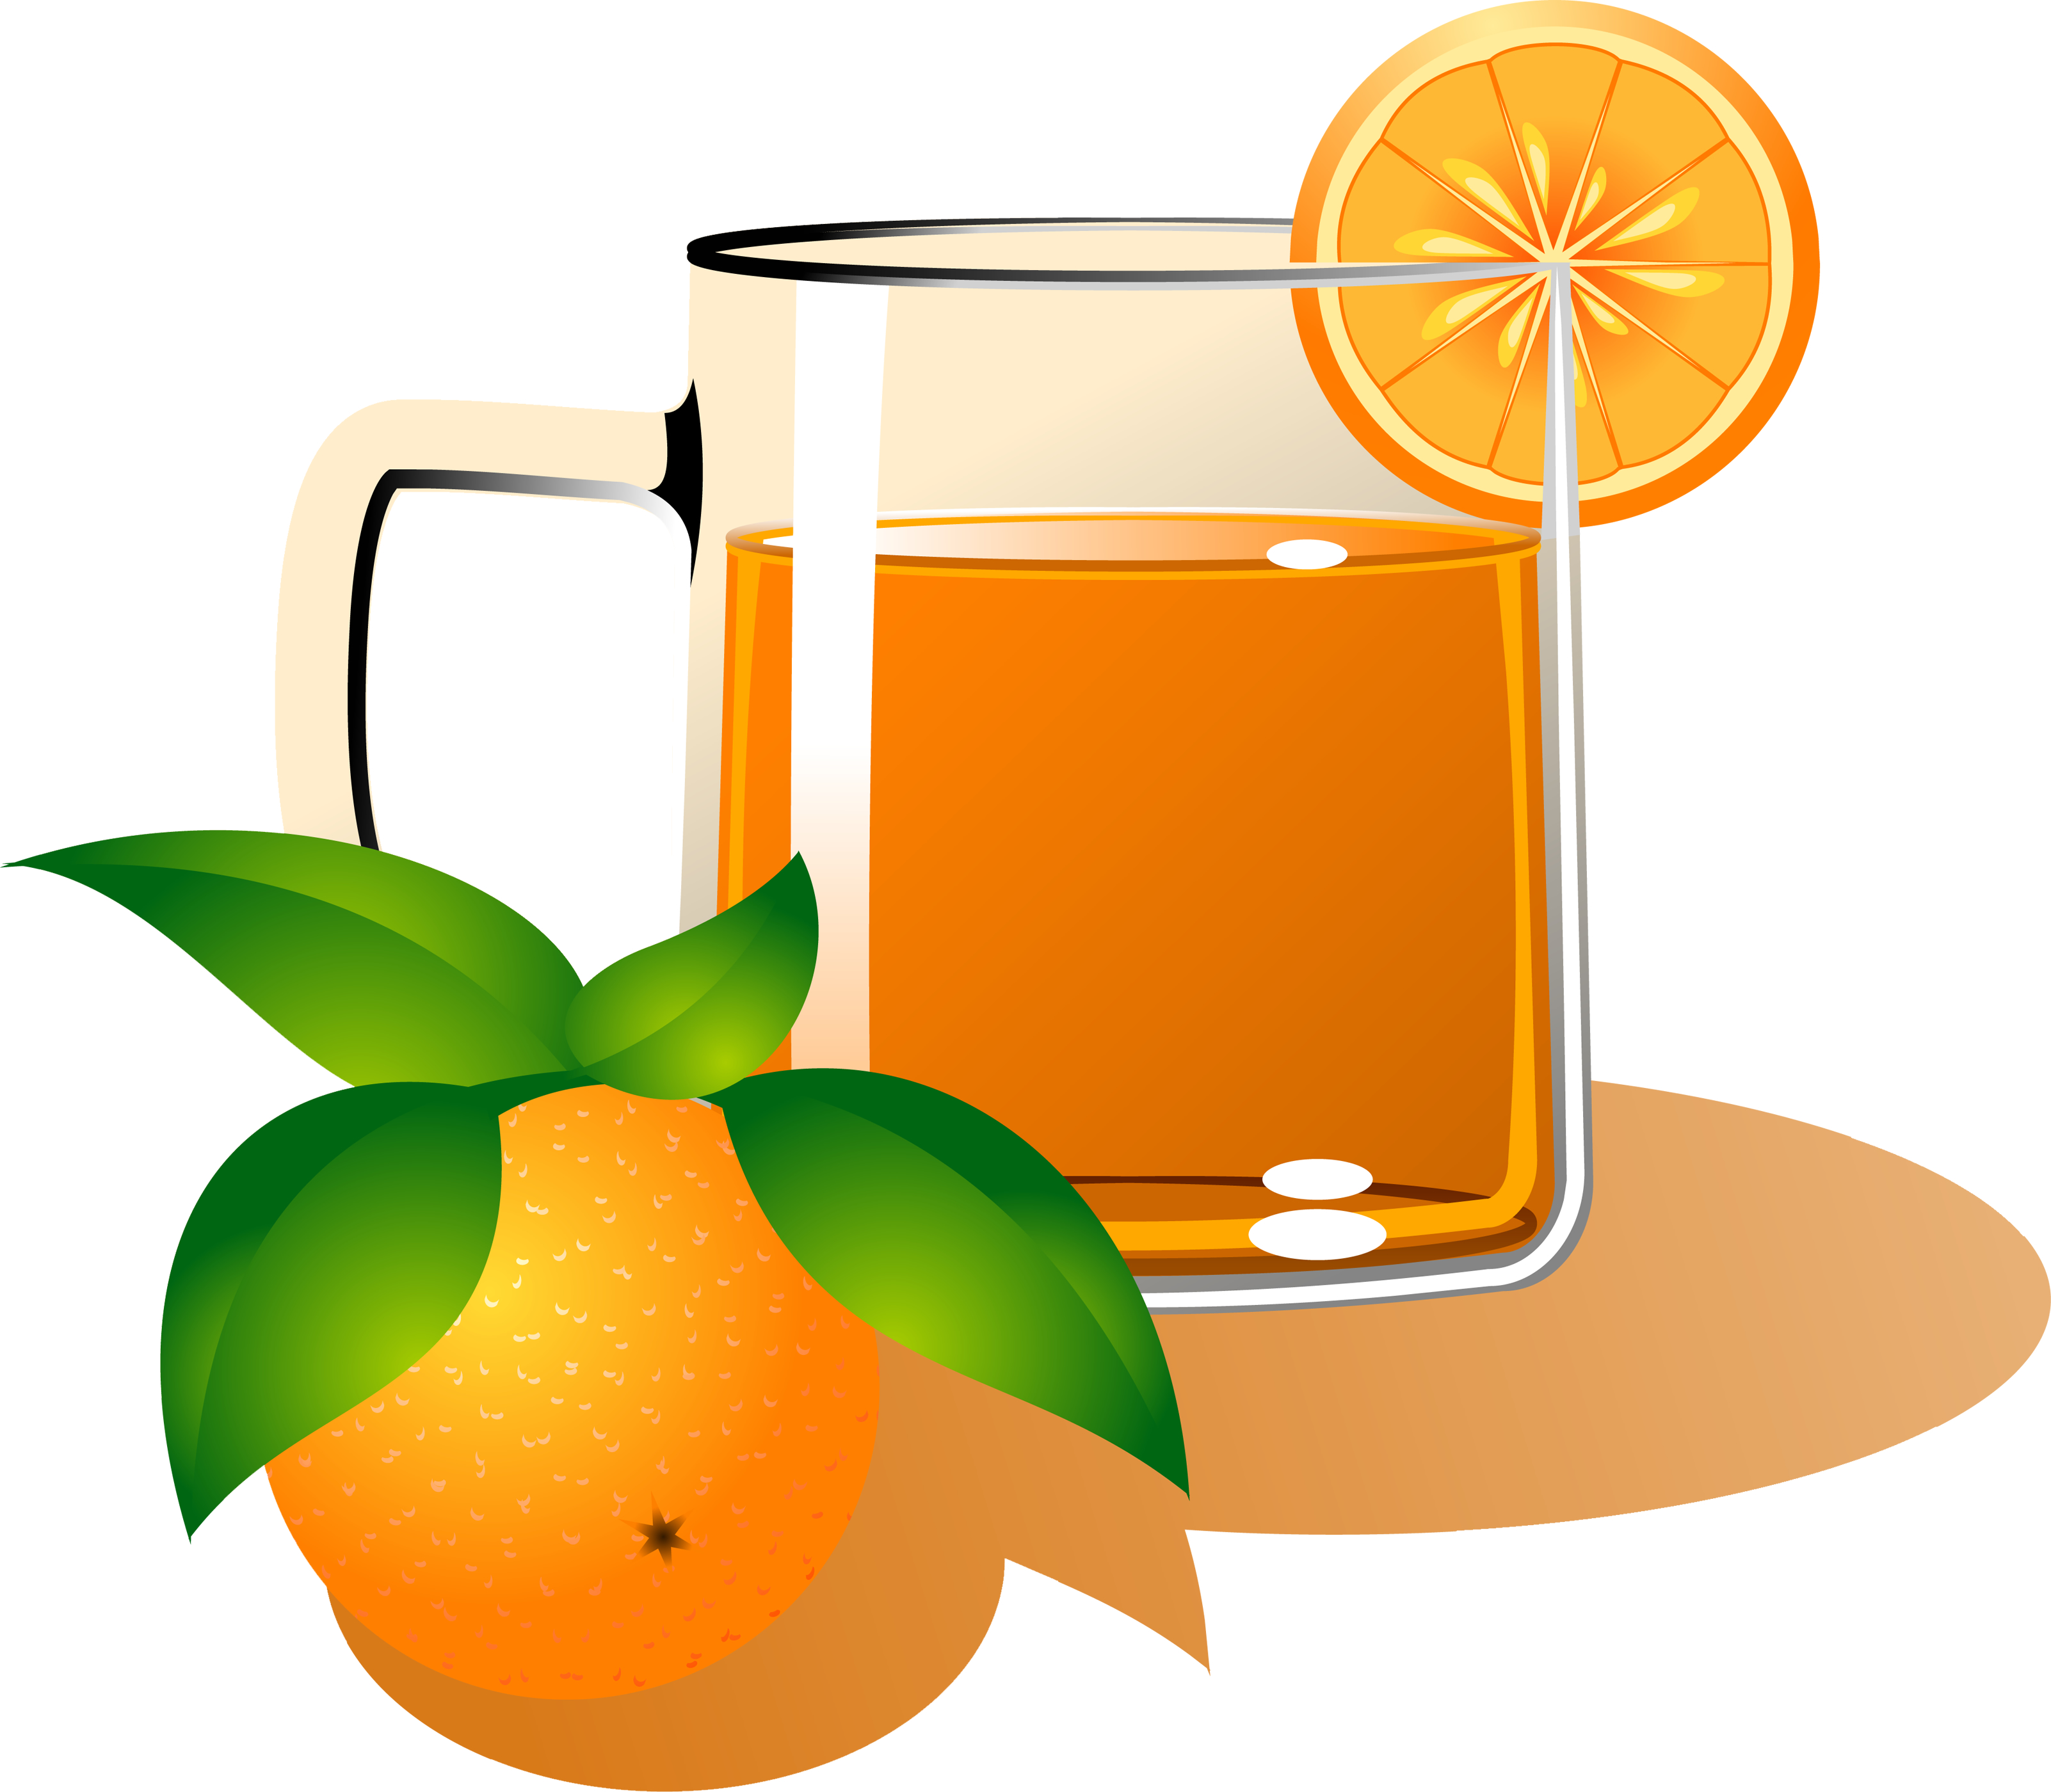 Orange Juice Clipart Black And White | Clipart Panda - Free ...